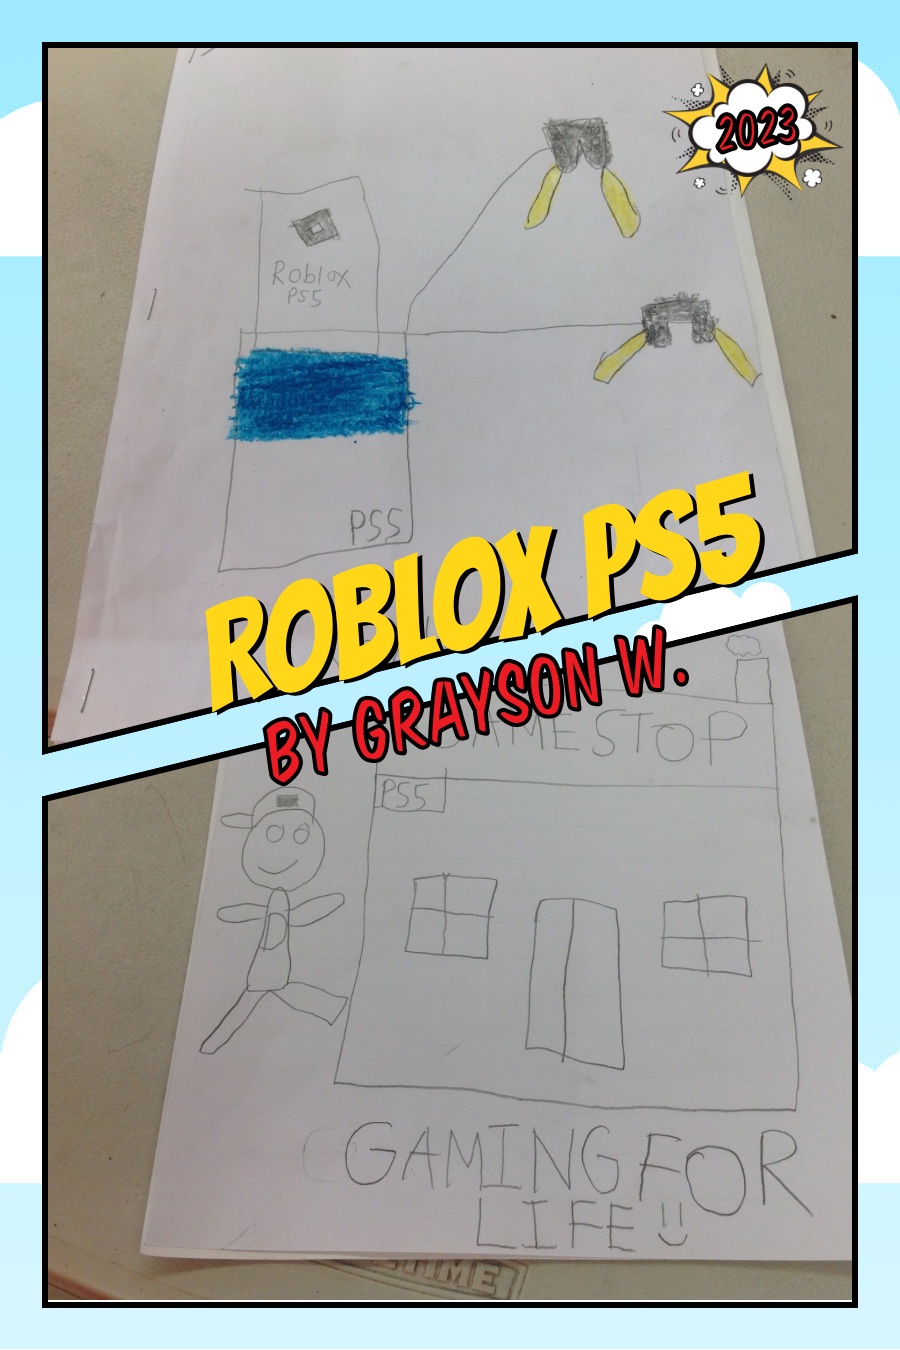 Roblox PS5 BY GRAYSON W